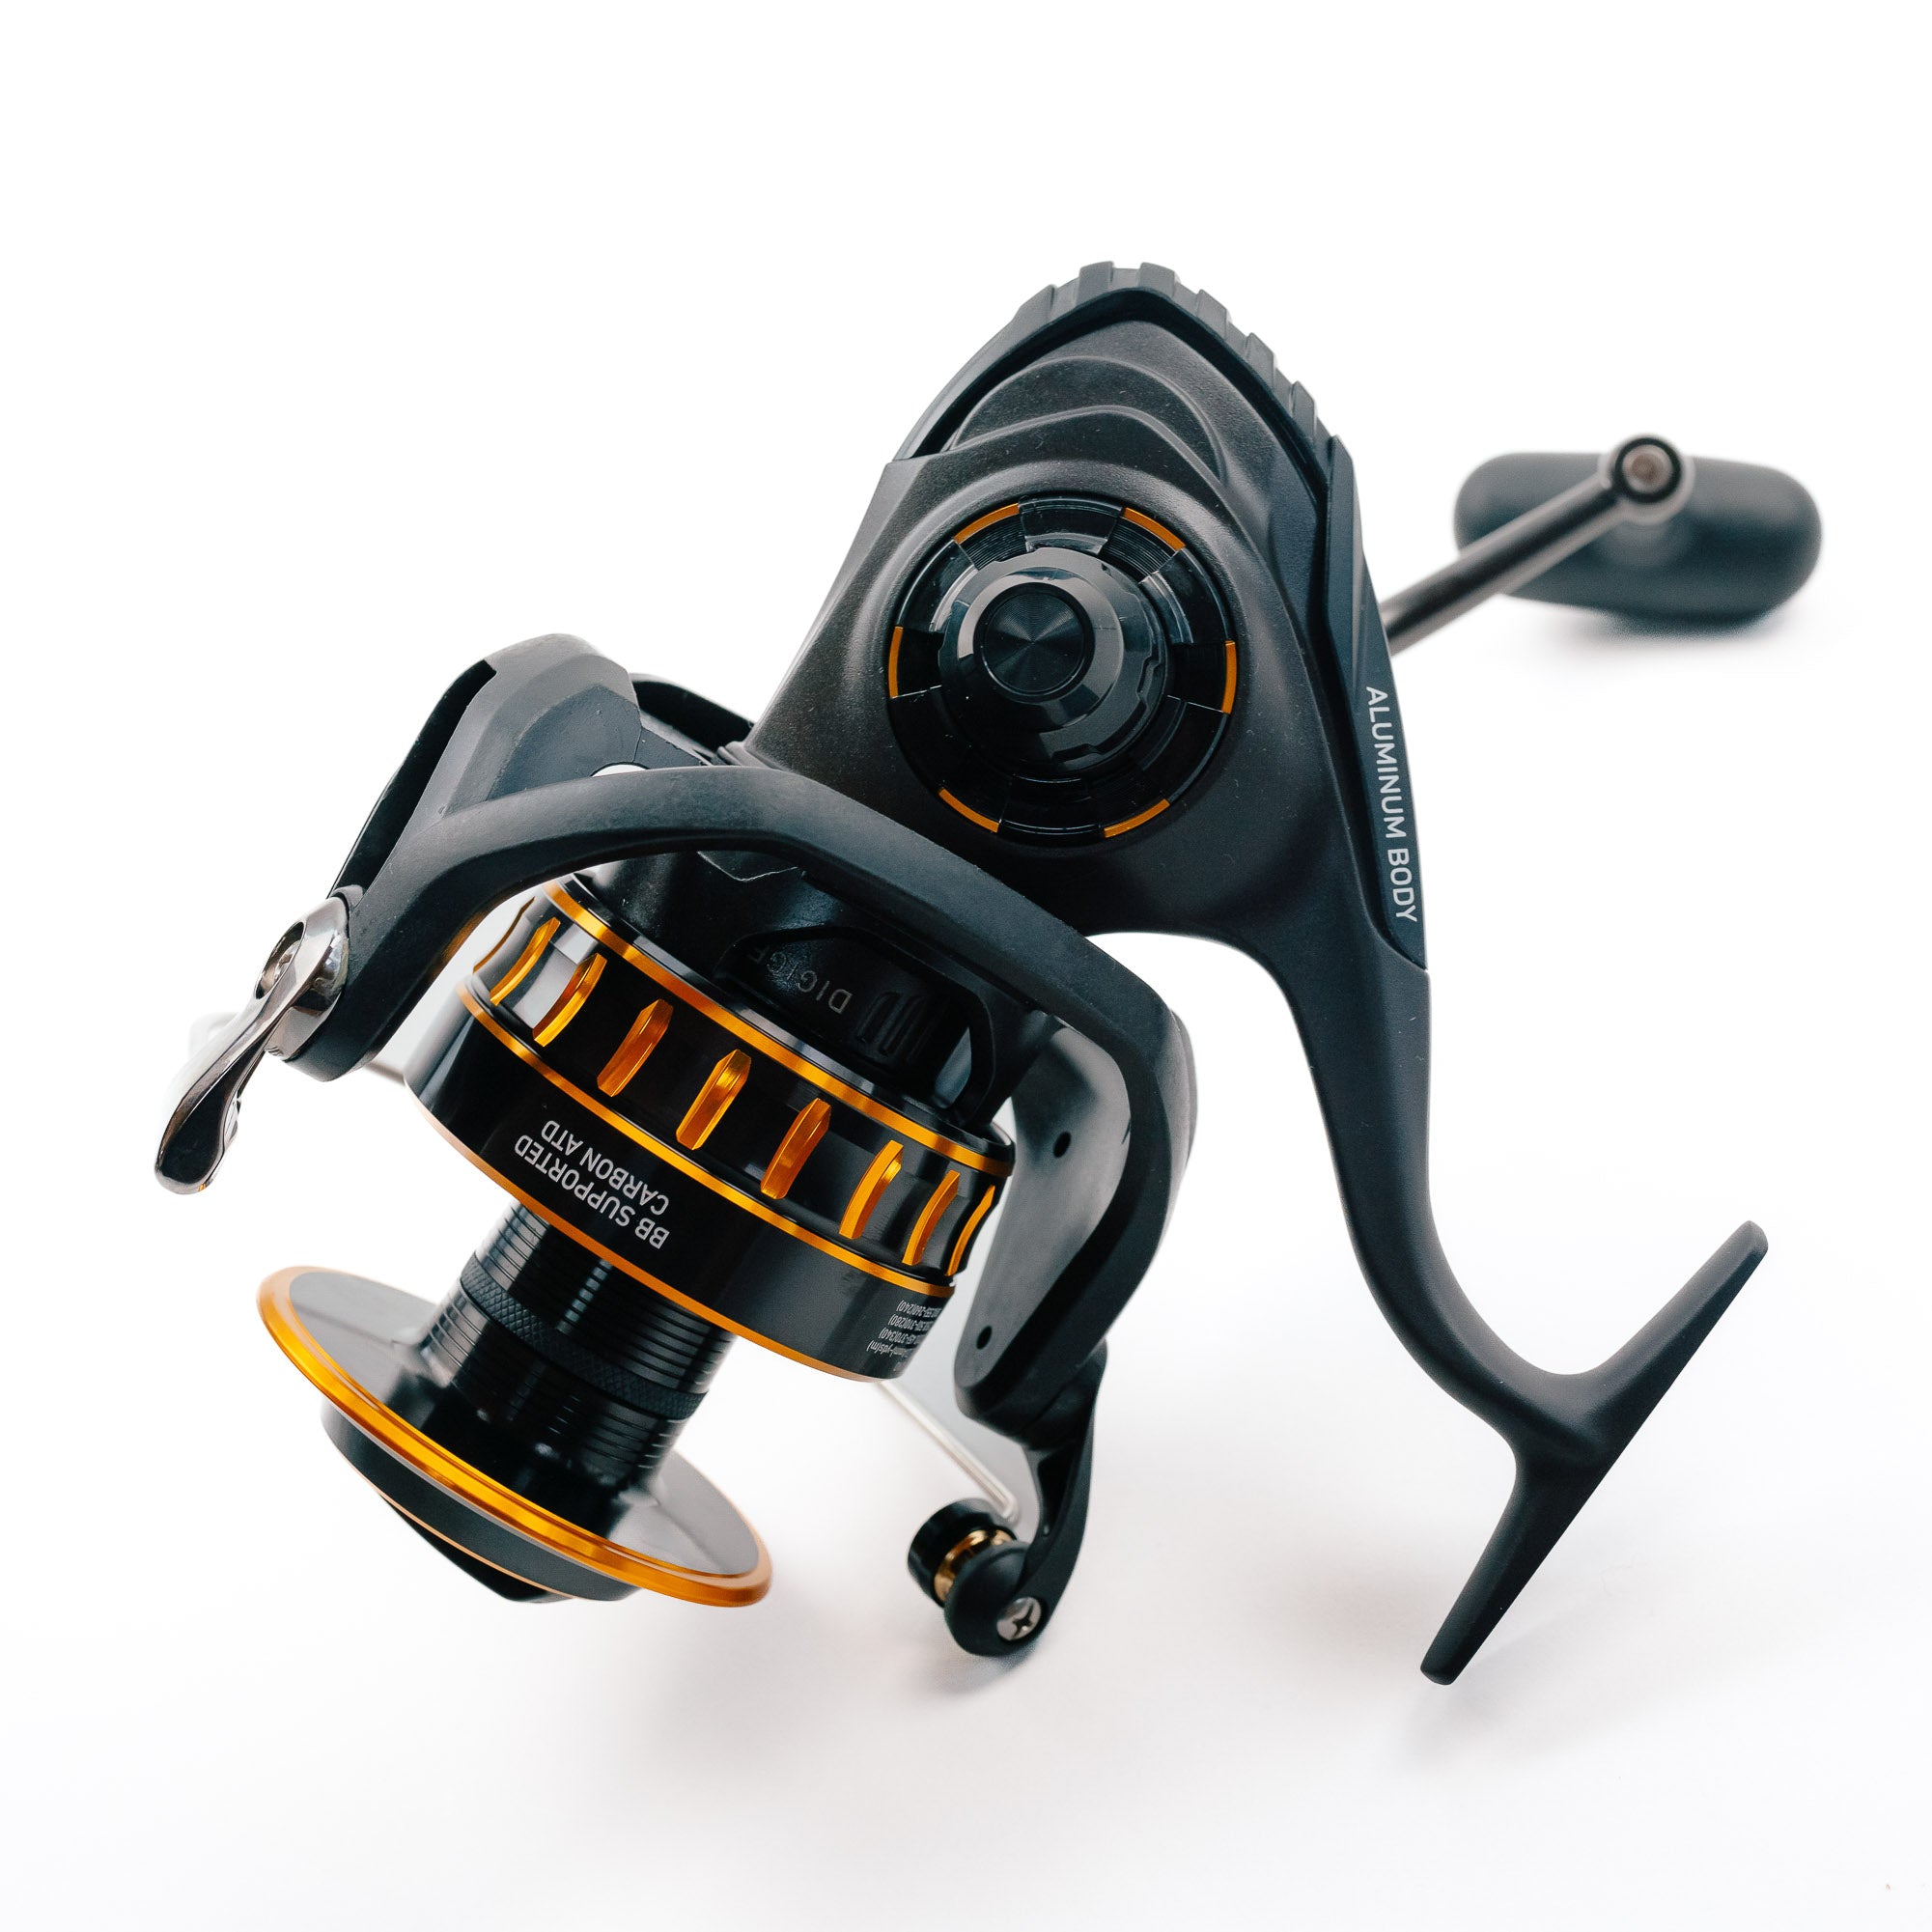 Carrete Daiwa New Bg 6500 Spinning Reel – A la pesca